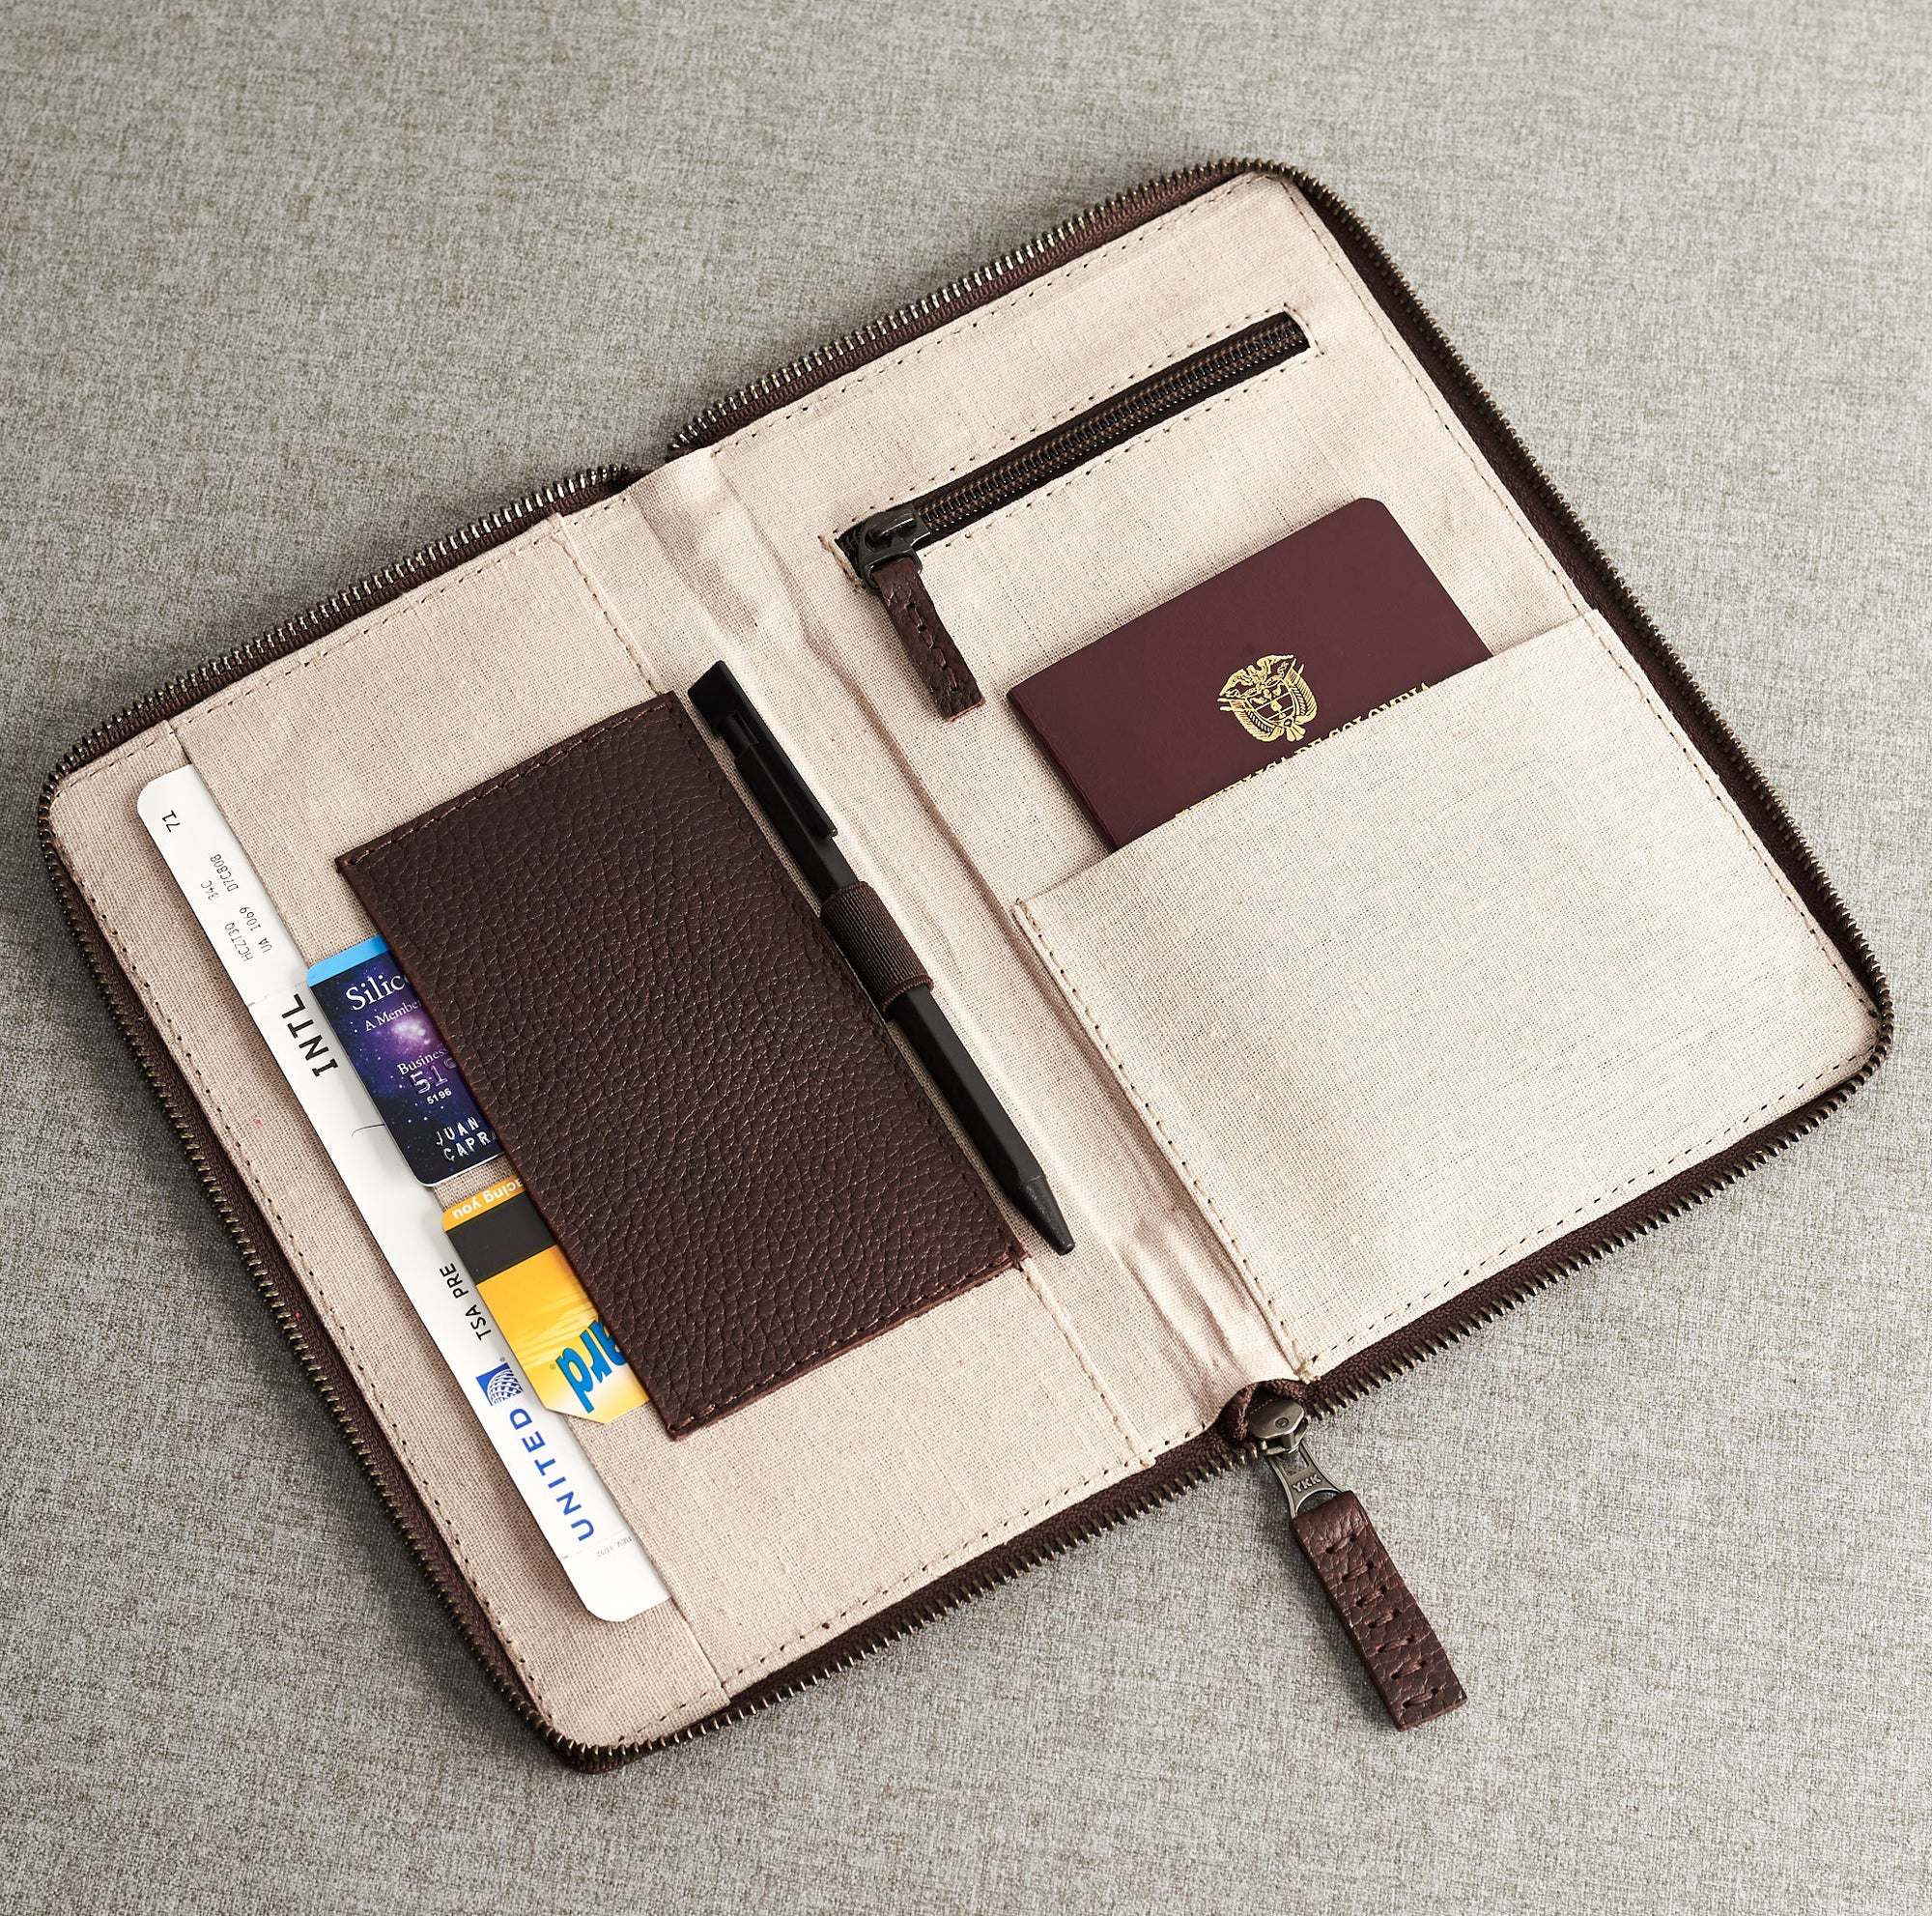  Dark brown leather passport for travelers, gifts for men. Travel journal, document organizer holder